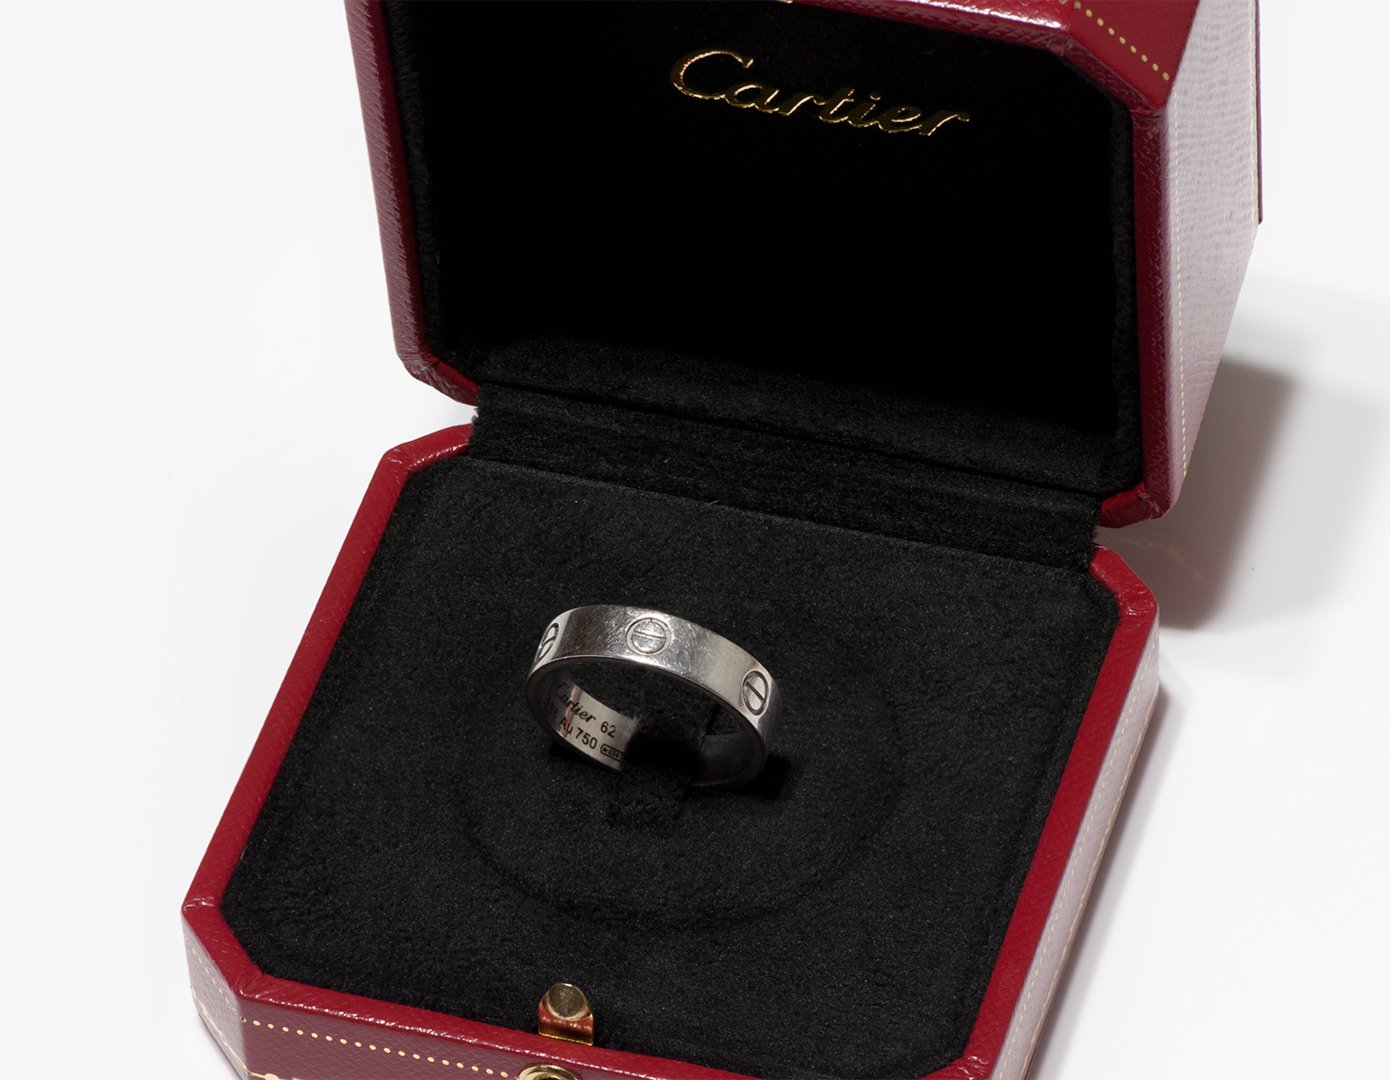 Cartier Paris 18K White Gold Love Ring